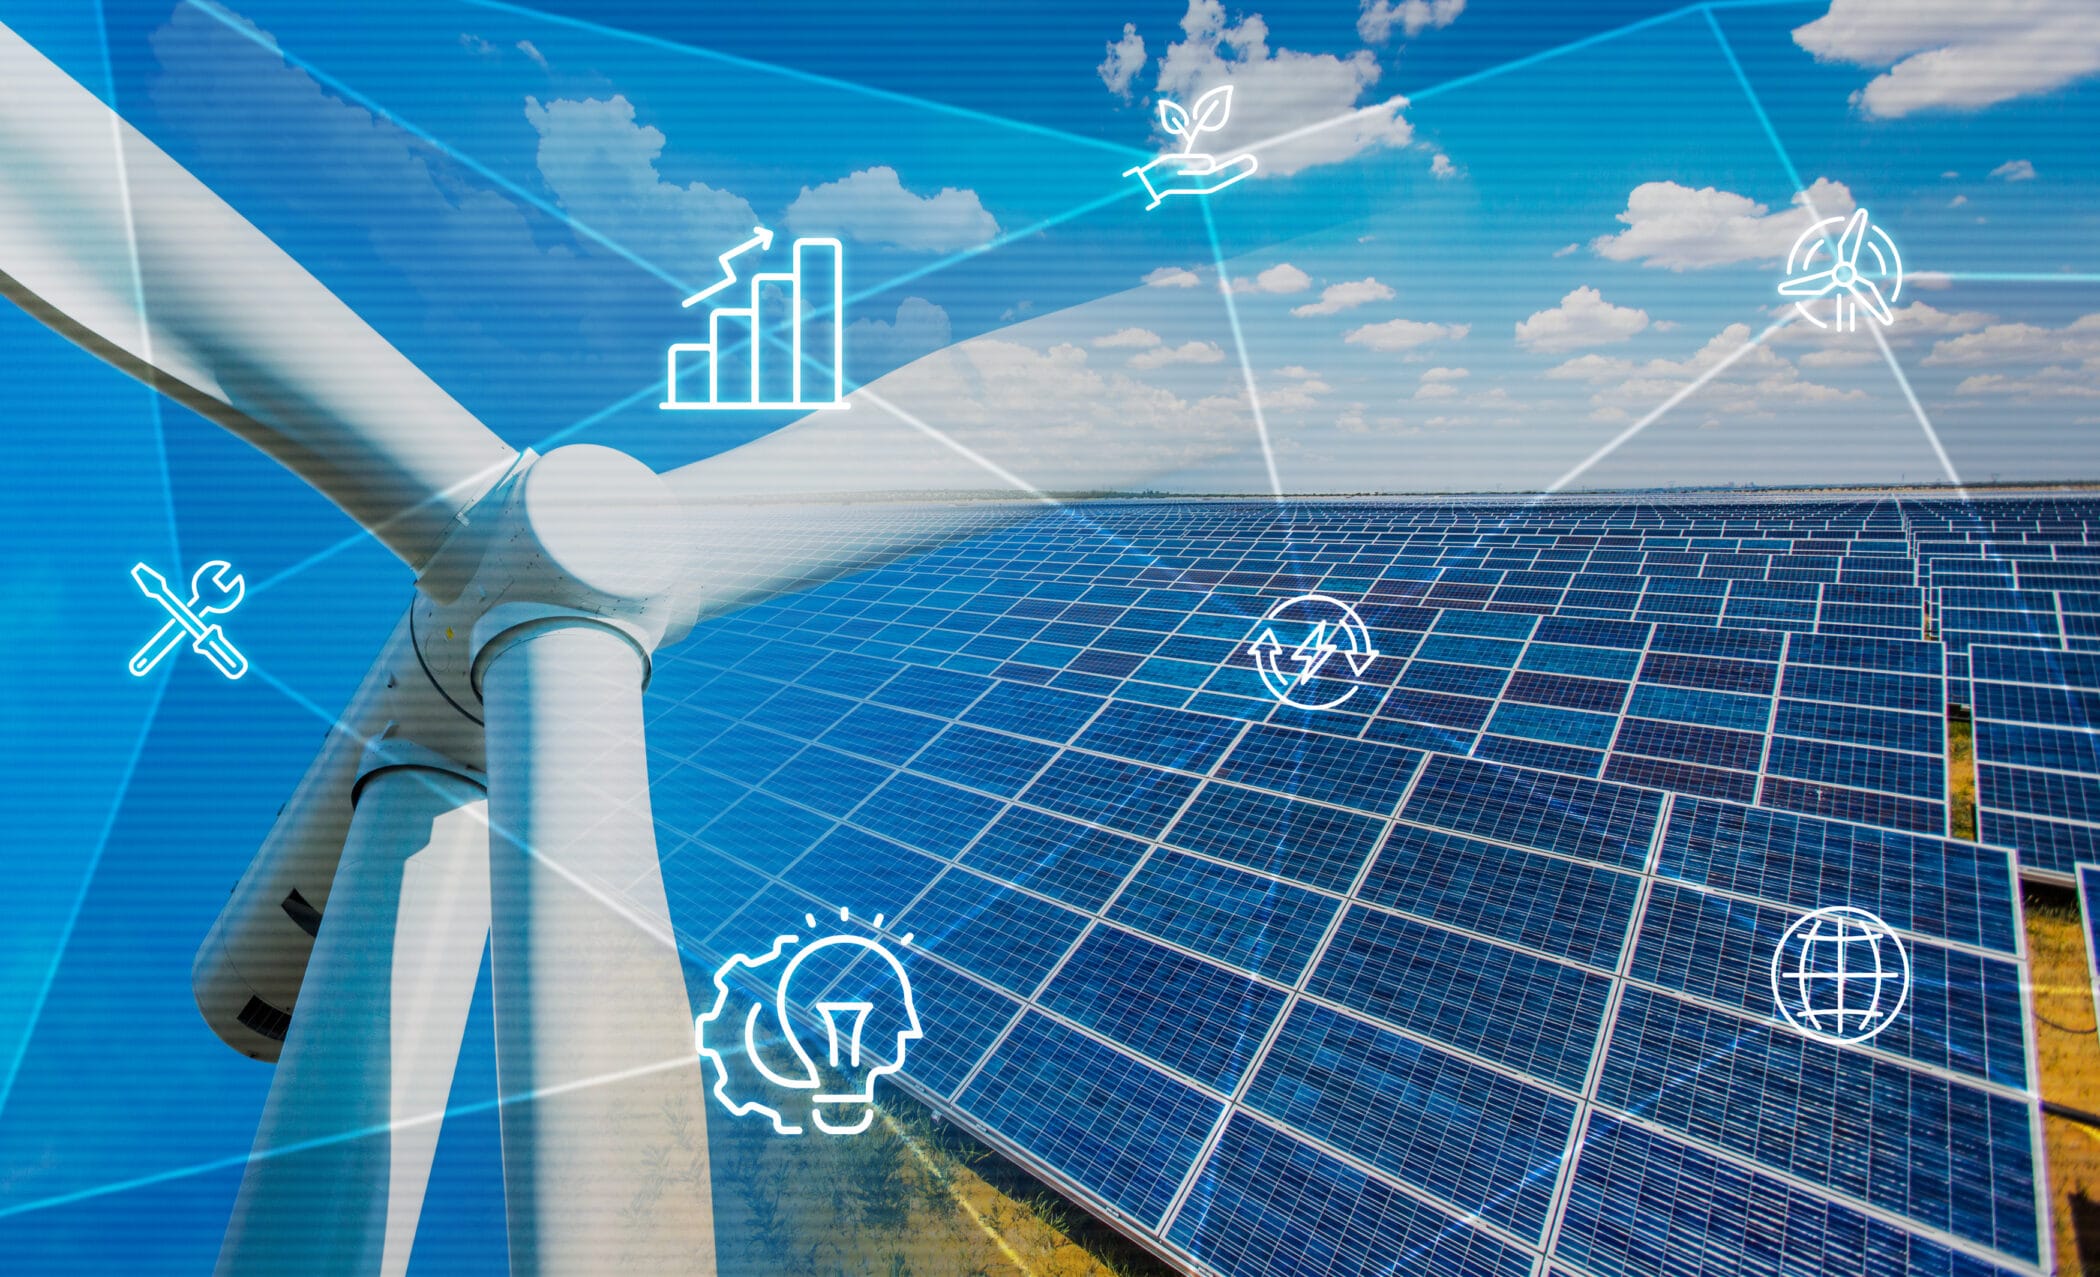 wind turbine and solar panel with digital icons overlayed - digitalisation - mainstream renewable power